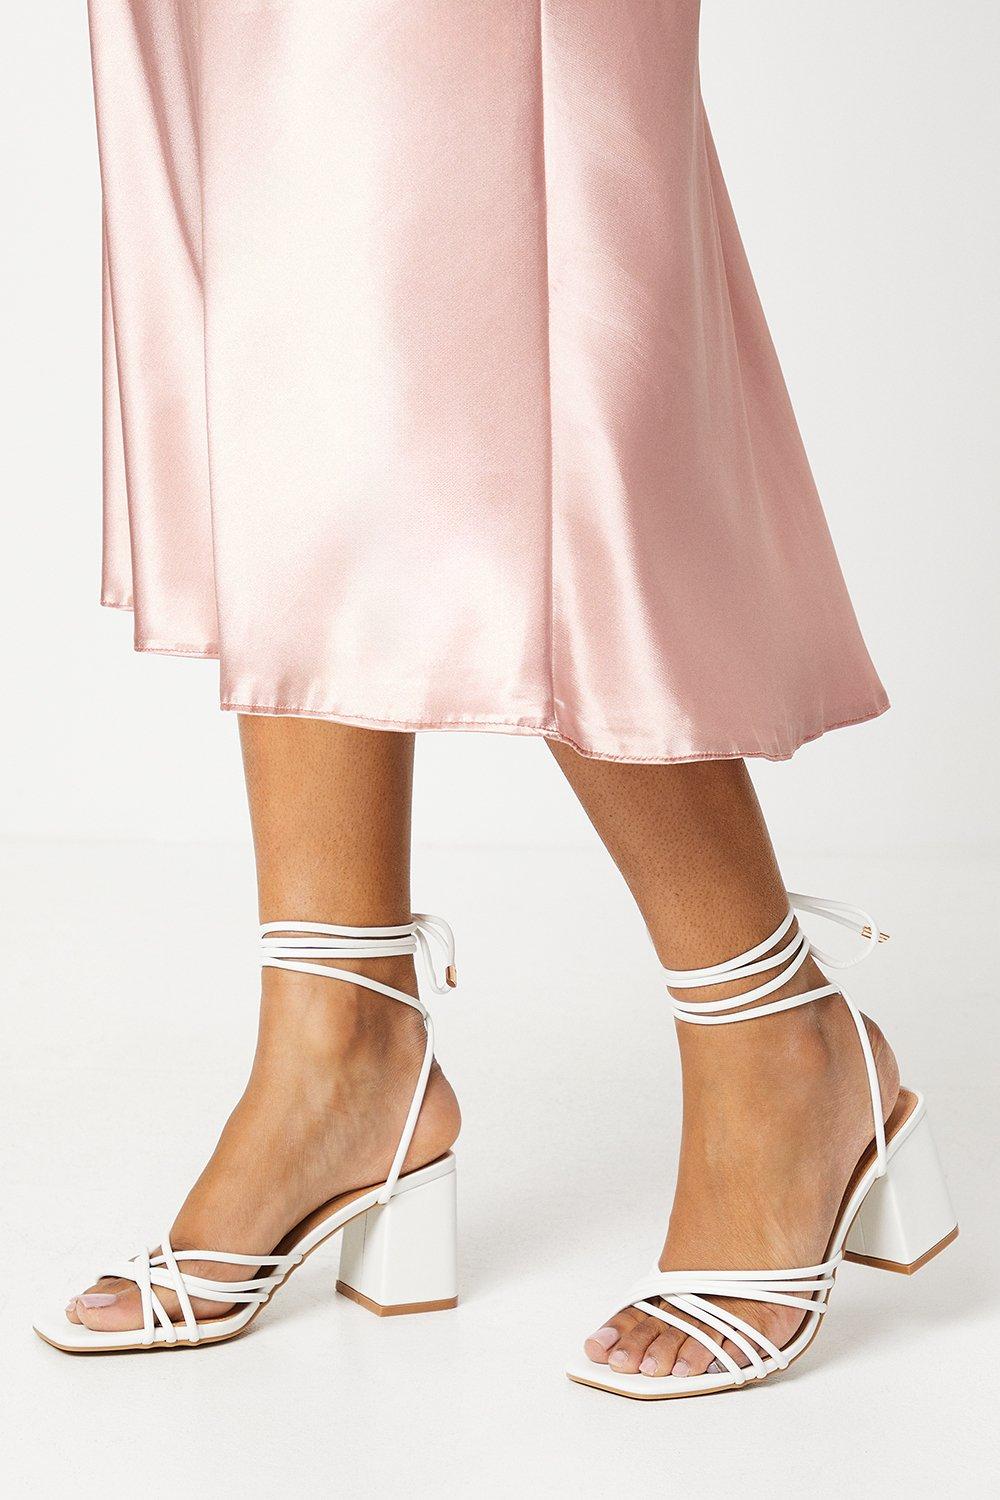 Women’s Faith: Celeste Spaghetti Strap Lace-Up Block Heeled Sandals - white - 4